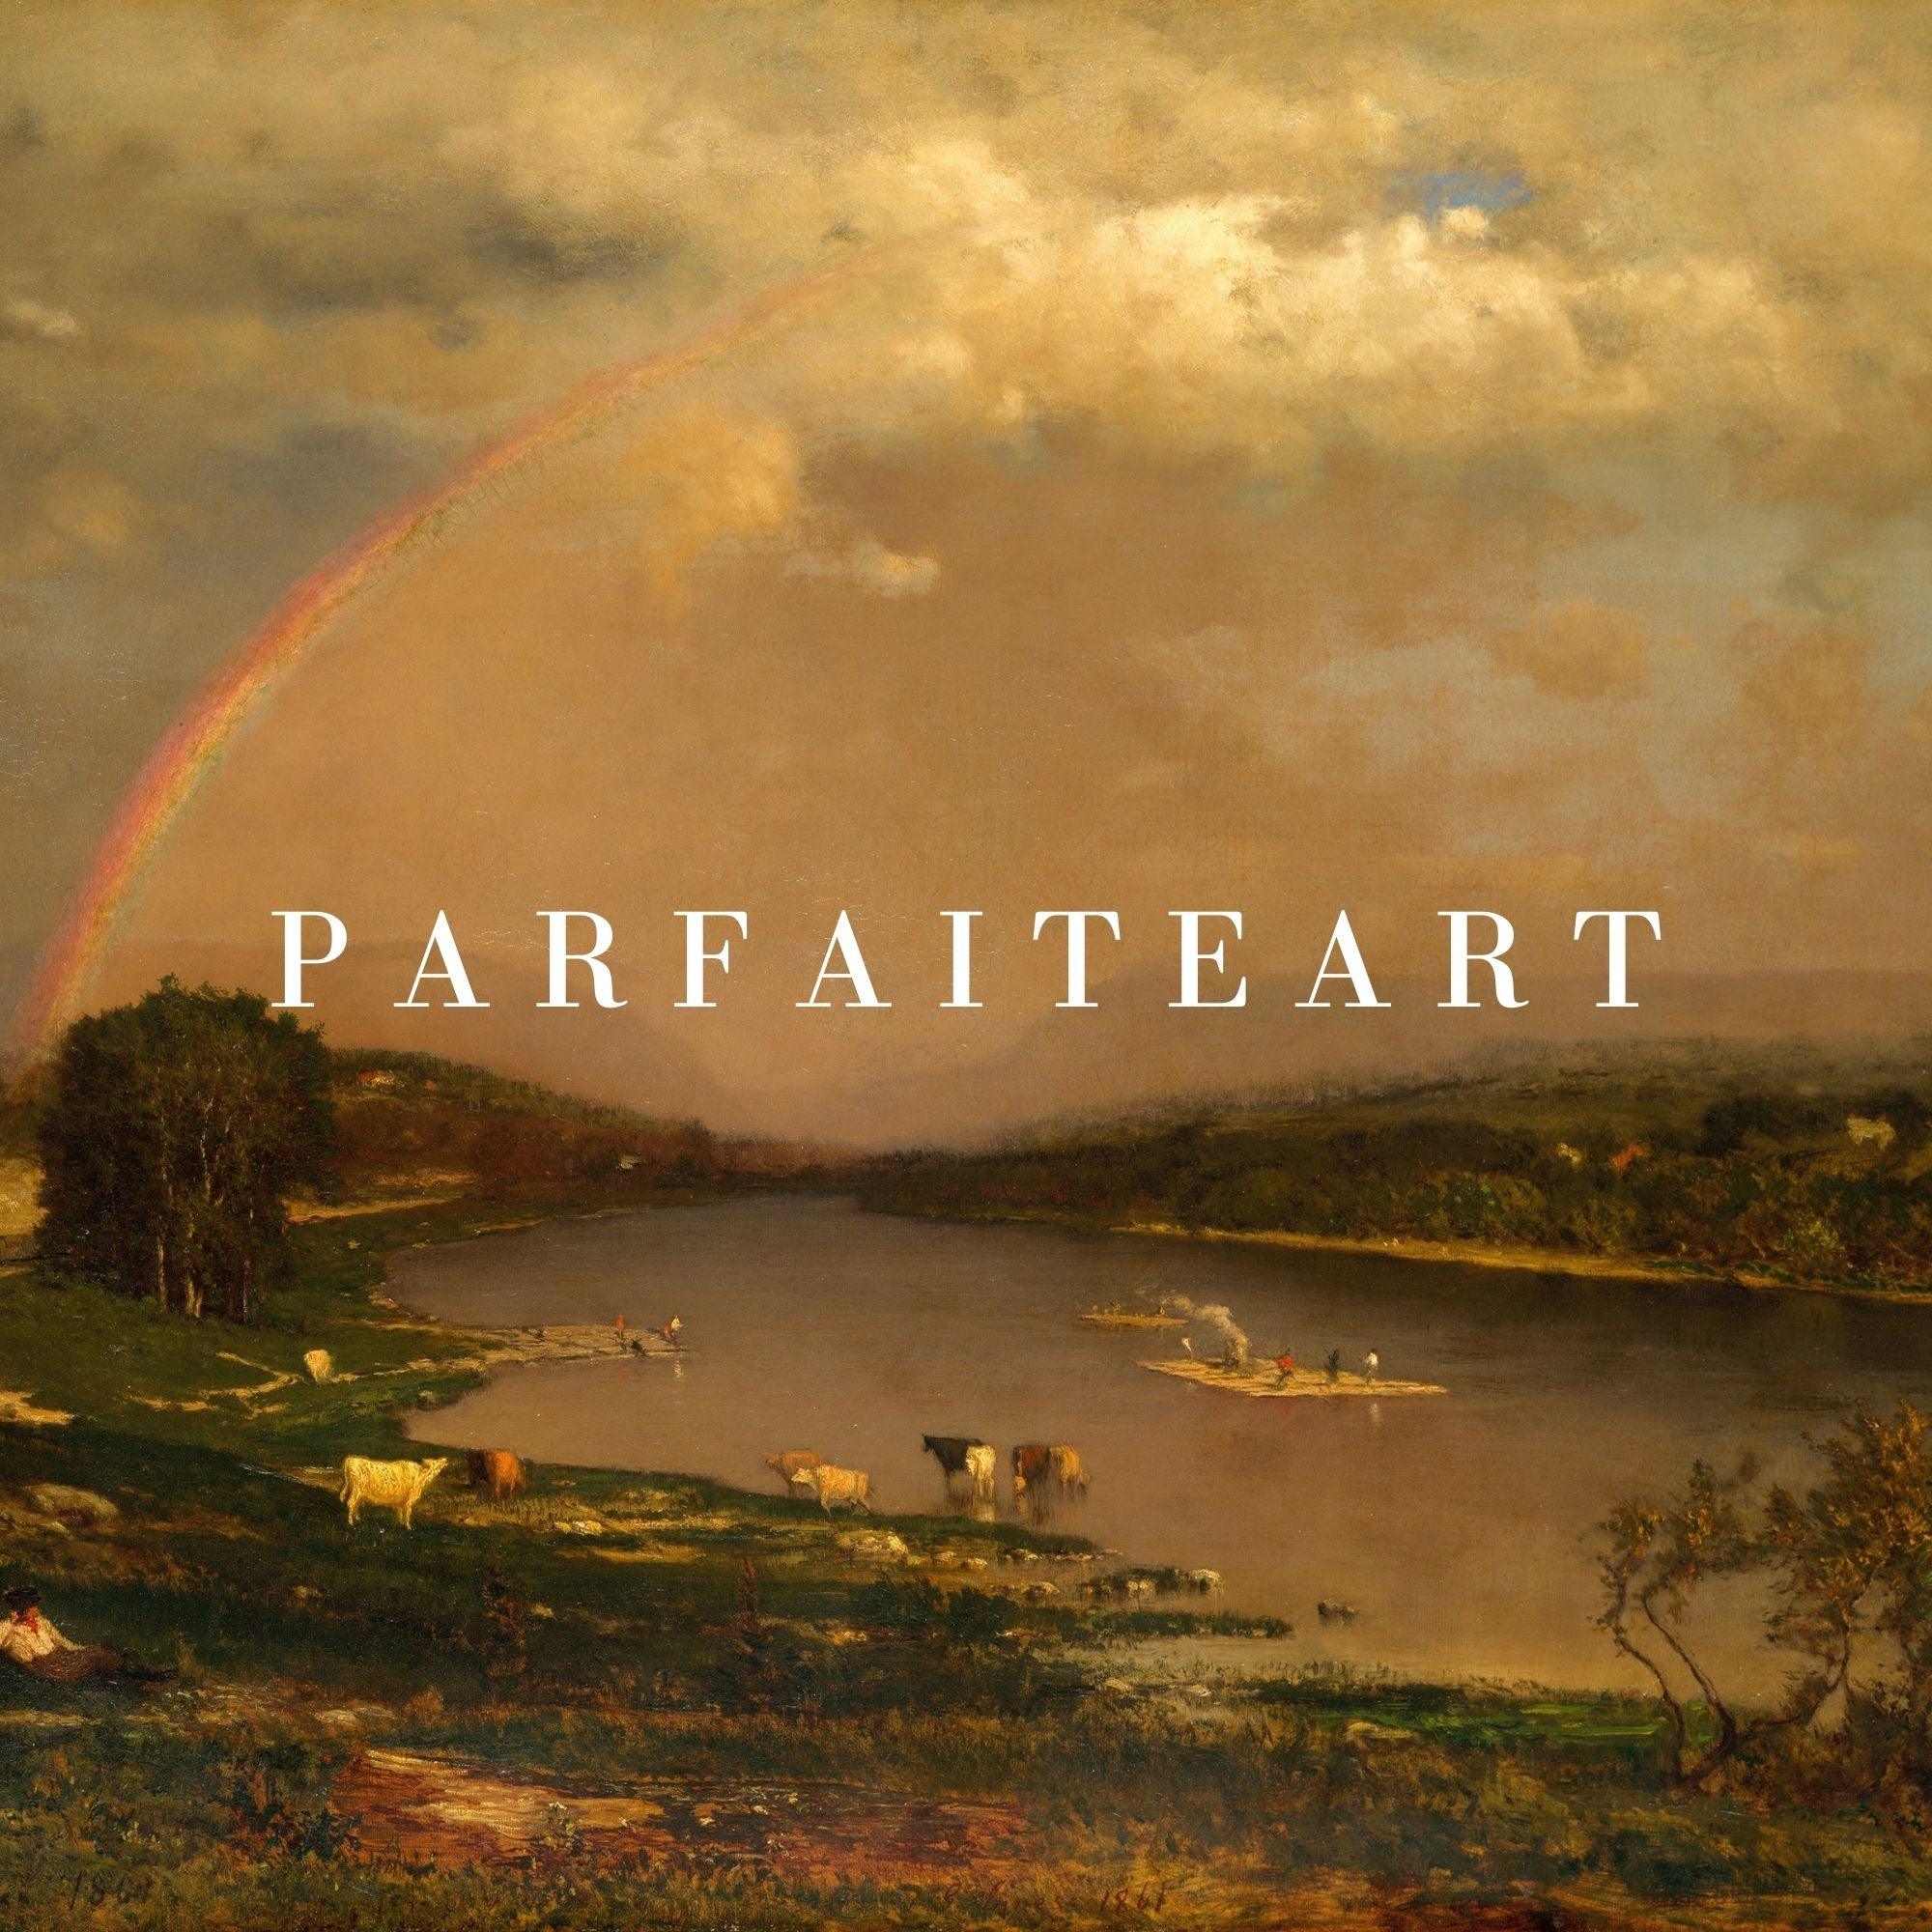 Sunset rainbow Vintage Art,Giclée print Landscape oil Paintings,Classic Artwork Canvas with stunning Landscape #64